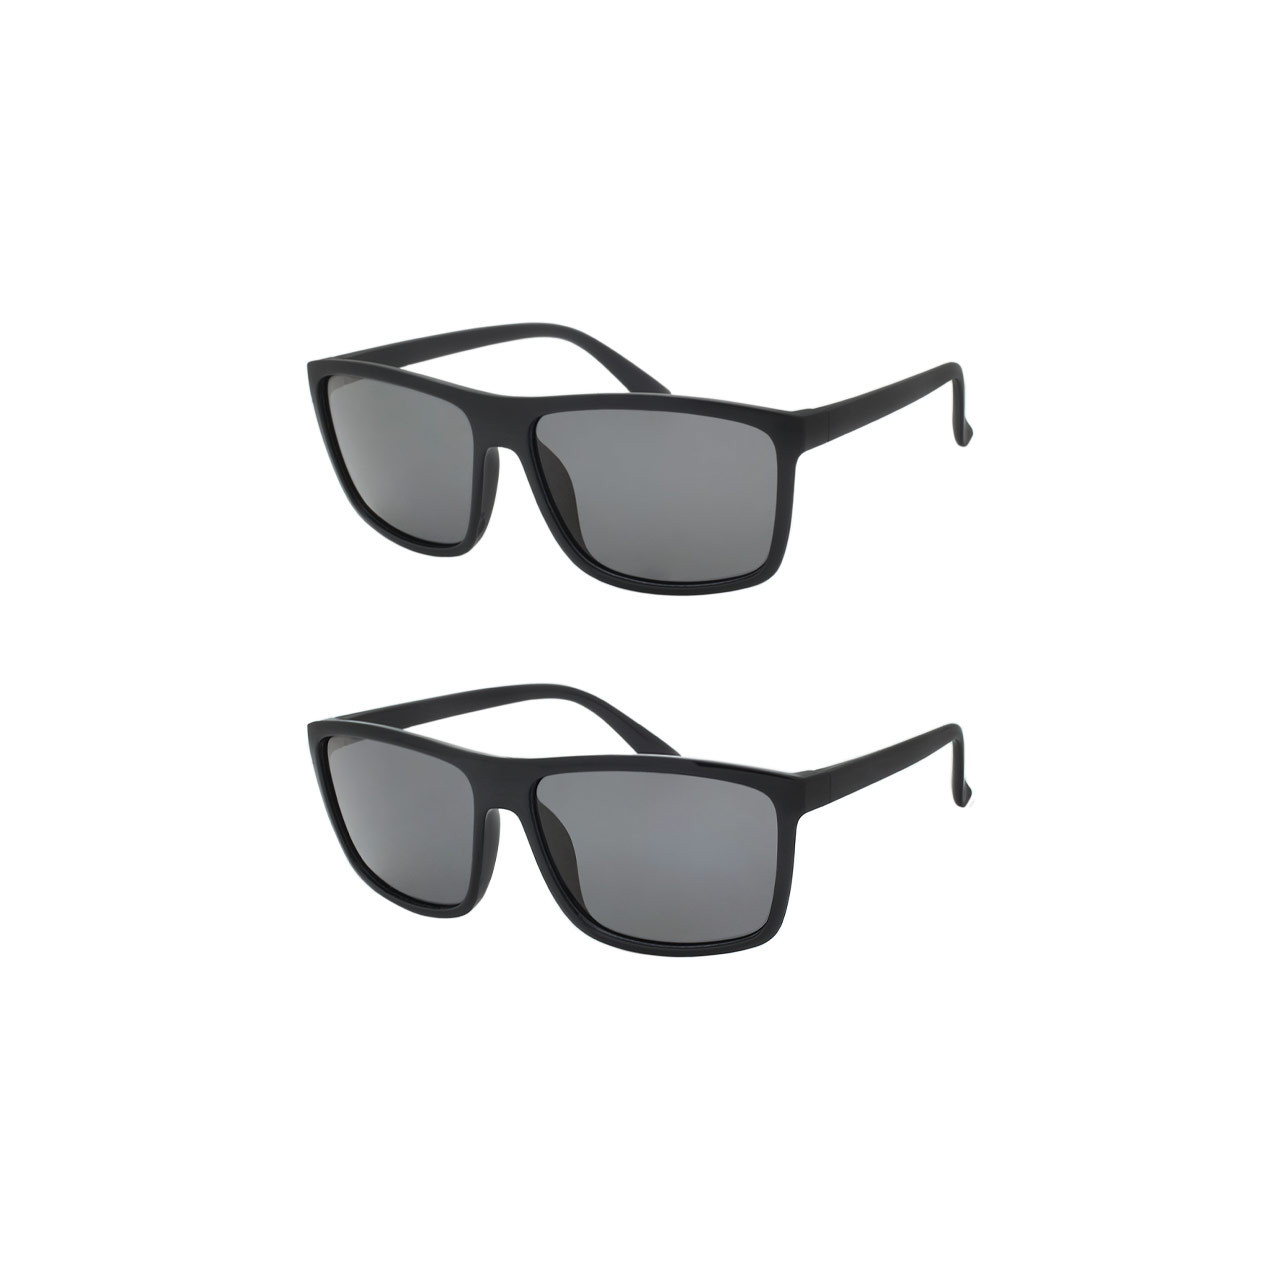 POLARIZED SPORT ASSTD. 12 PCS I TPOL21 - Shark Eyes, Inc. - Wholesale  Sunglasses, Reading Glasses, & Displays